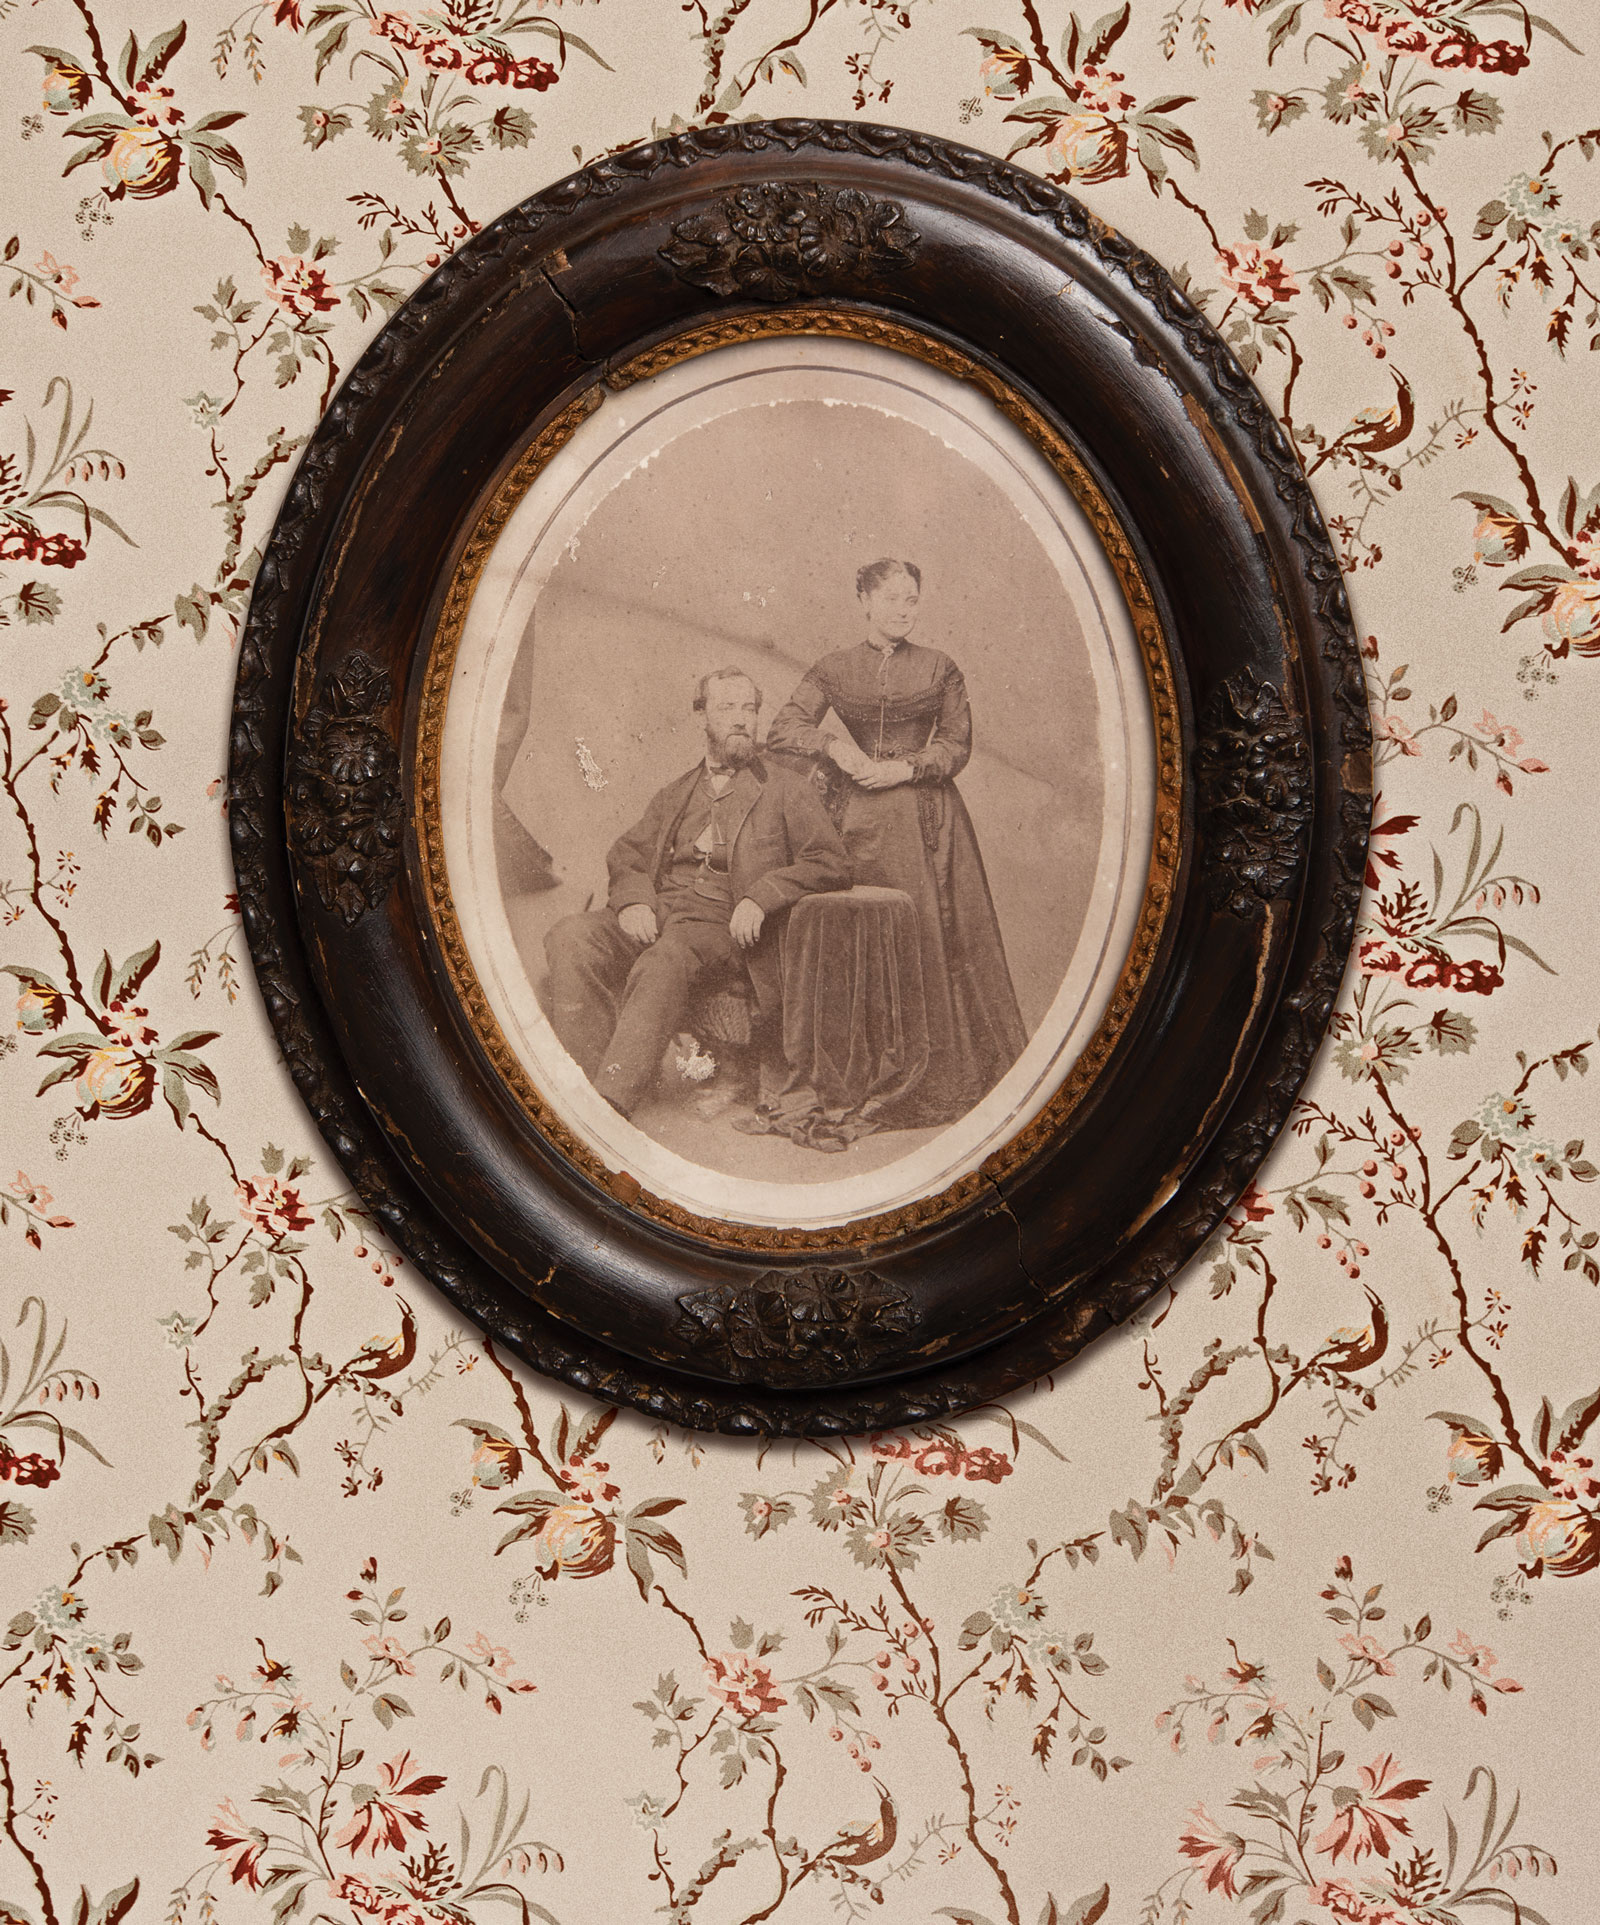 Portrait-of-Sanford-and-Kate-Conley-in-Oval-vintage-frame-hanging-on-floral-wallpaper.